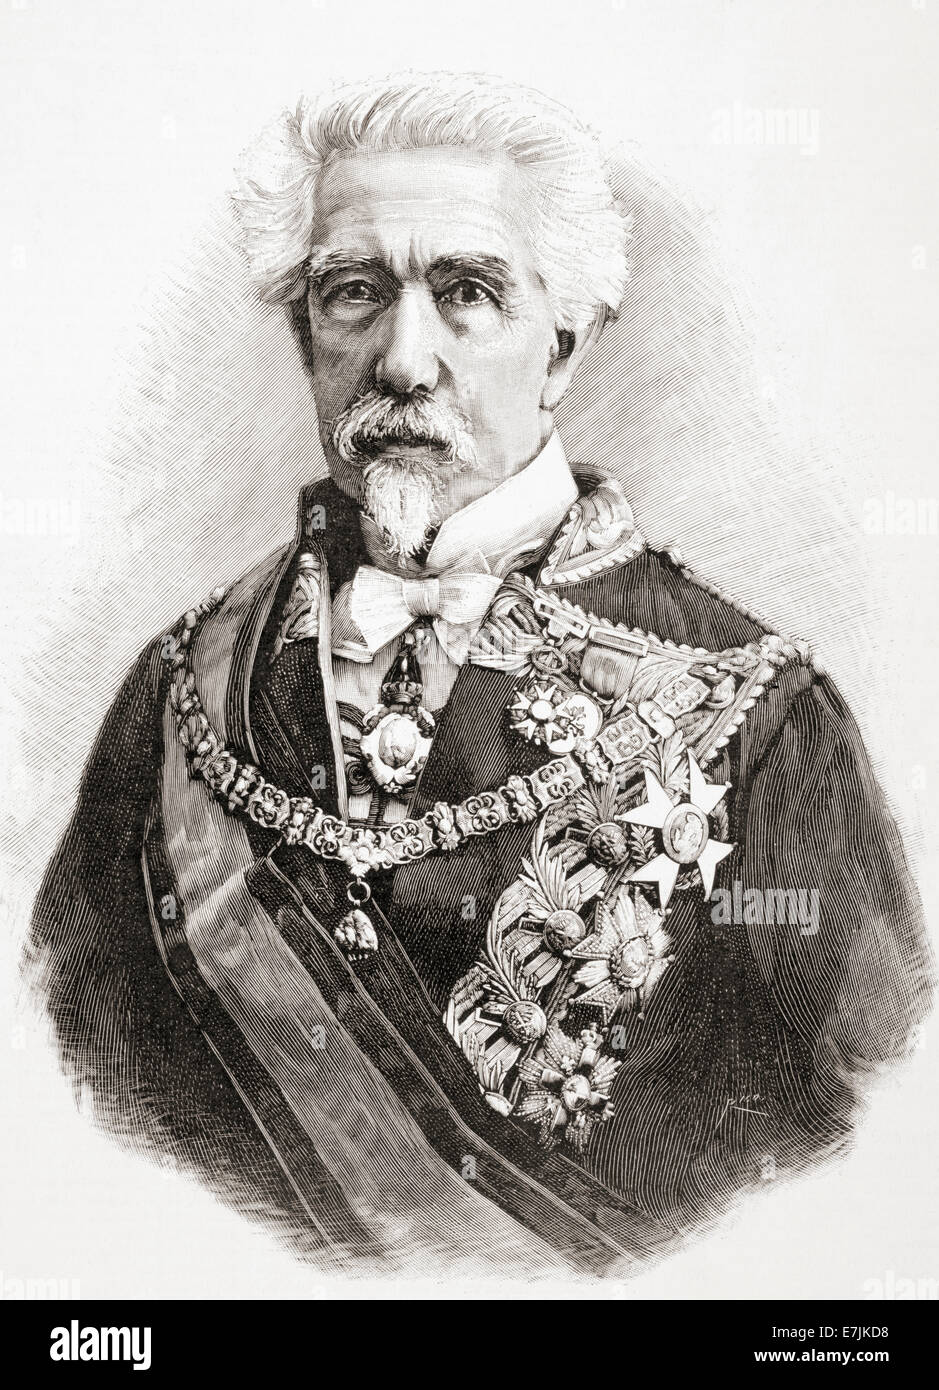 File:Juan González-Barba.jpg - Wikimedia Commons